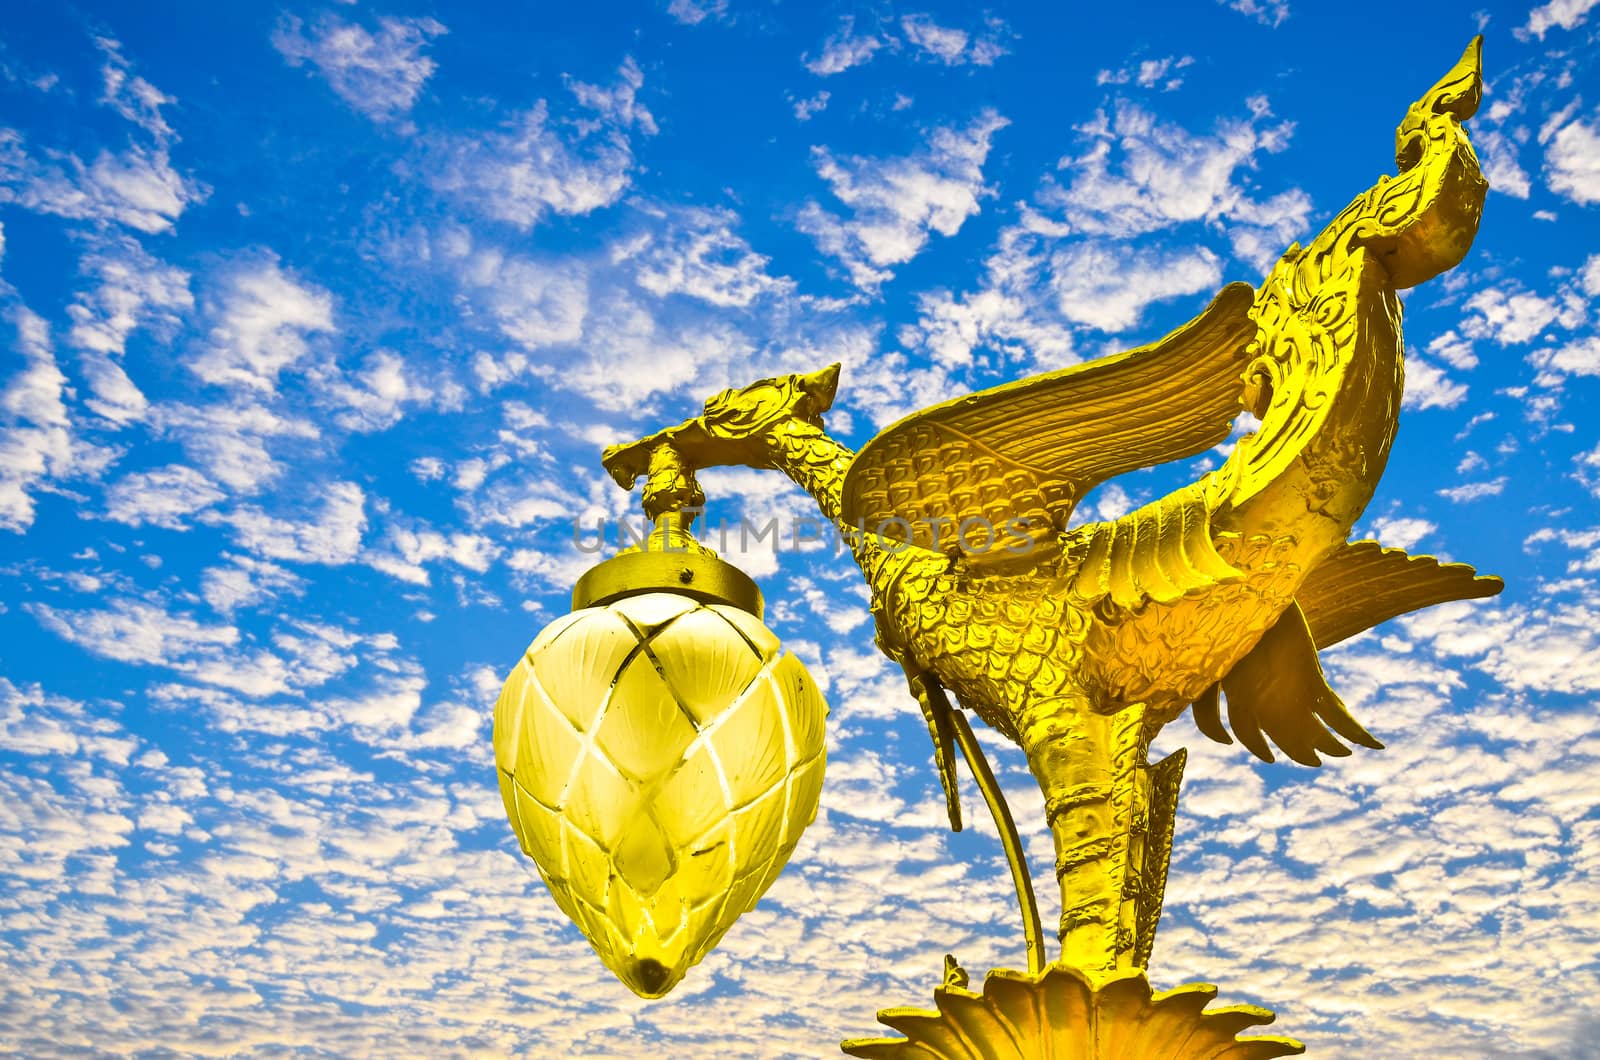 Golden swan sculpture on blue sky